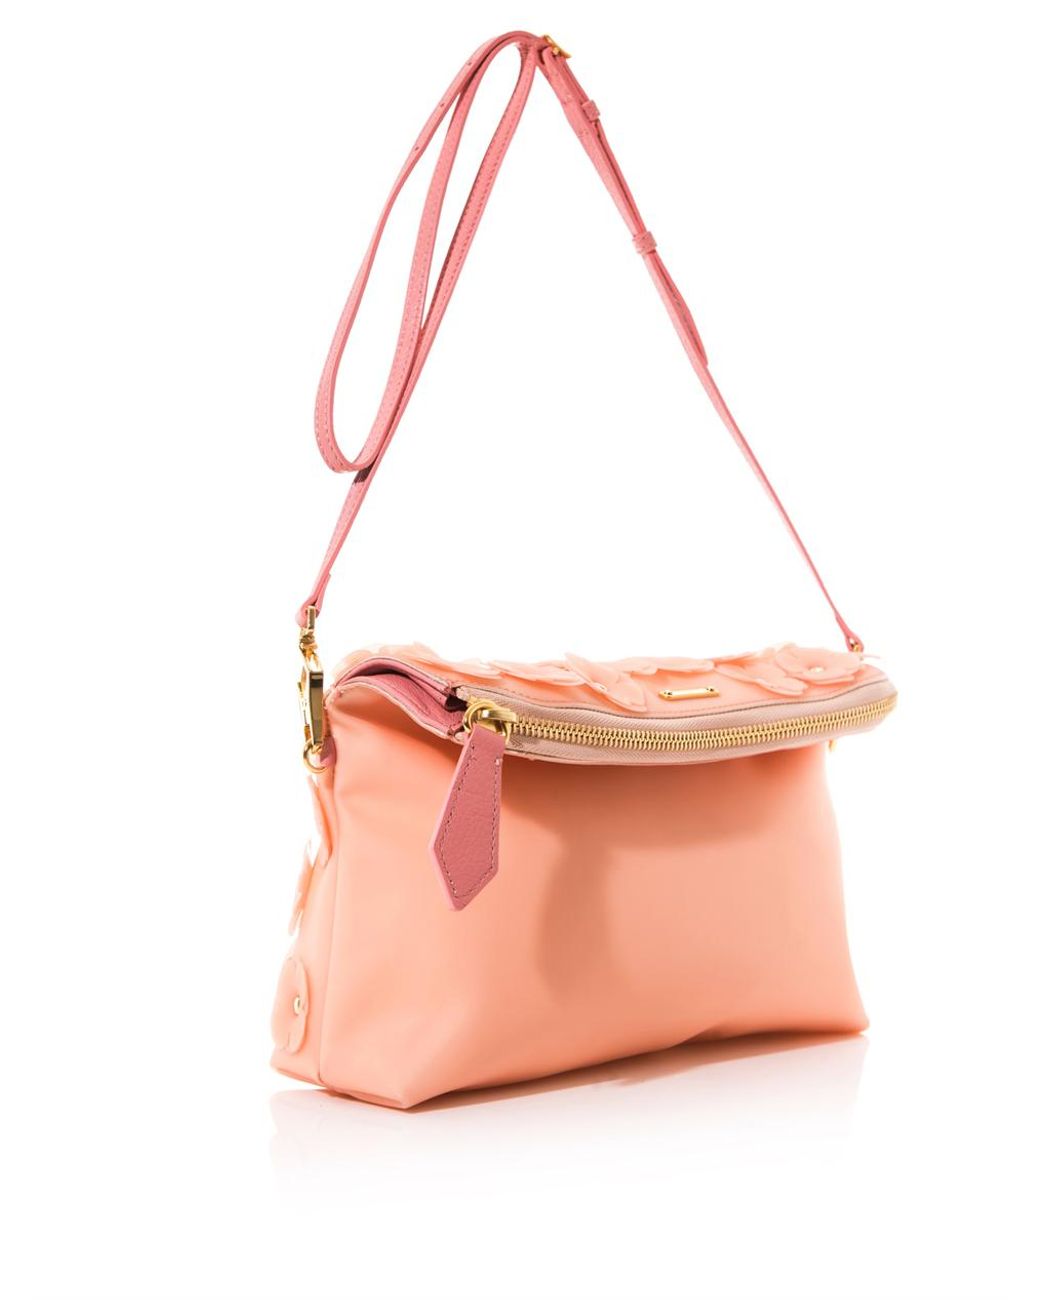 Burberry Prorsum Soft Rubber Appliqué Flower Clutch Bag in Pink | Lyst